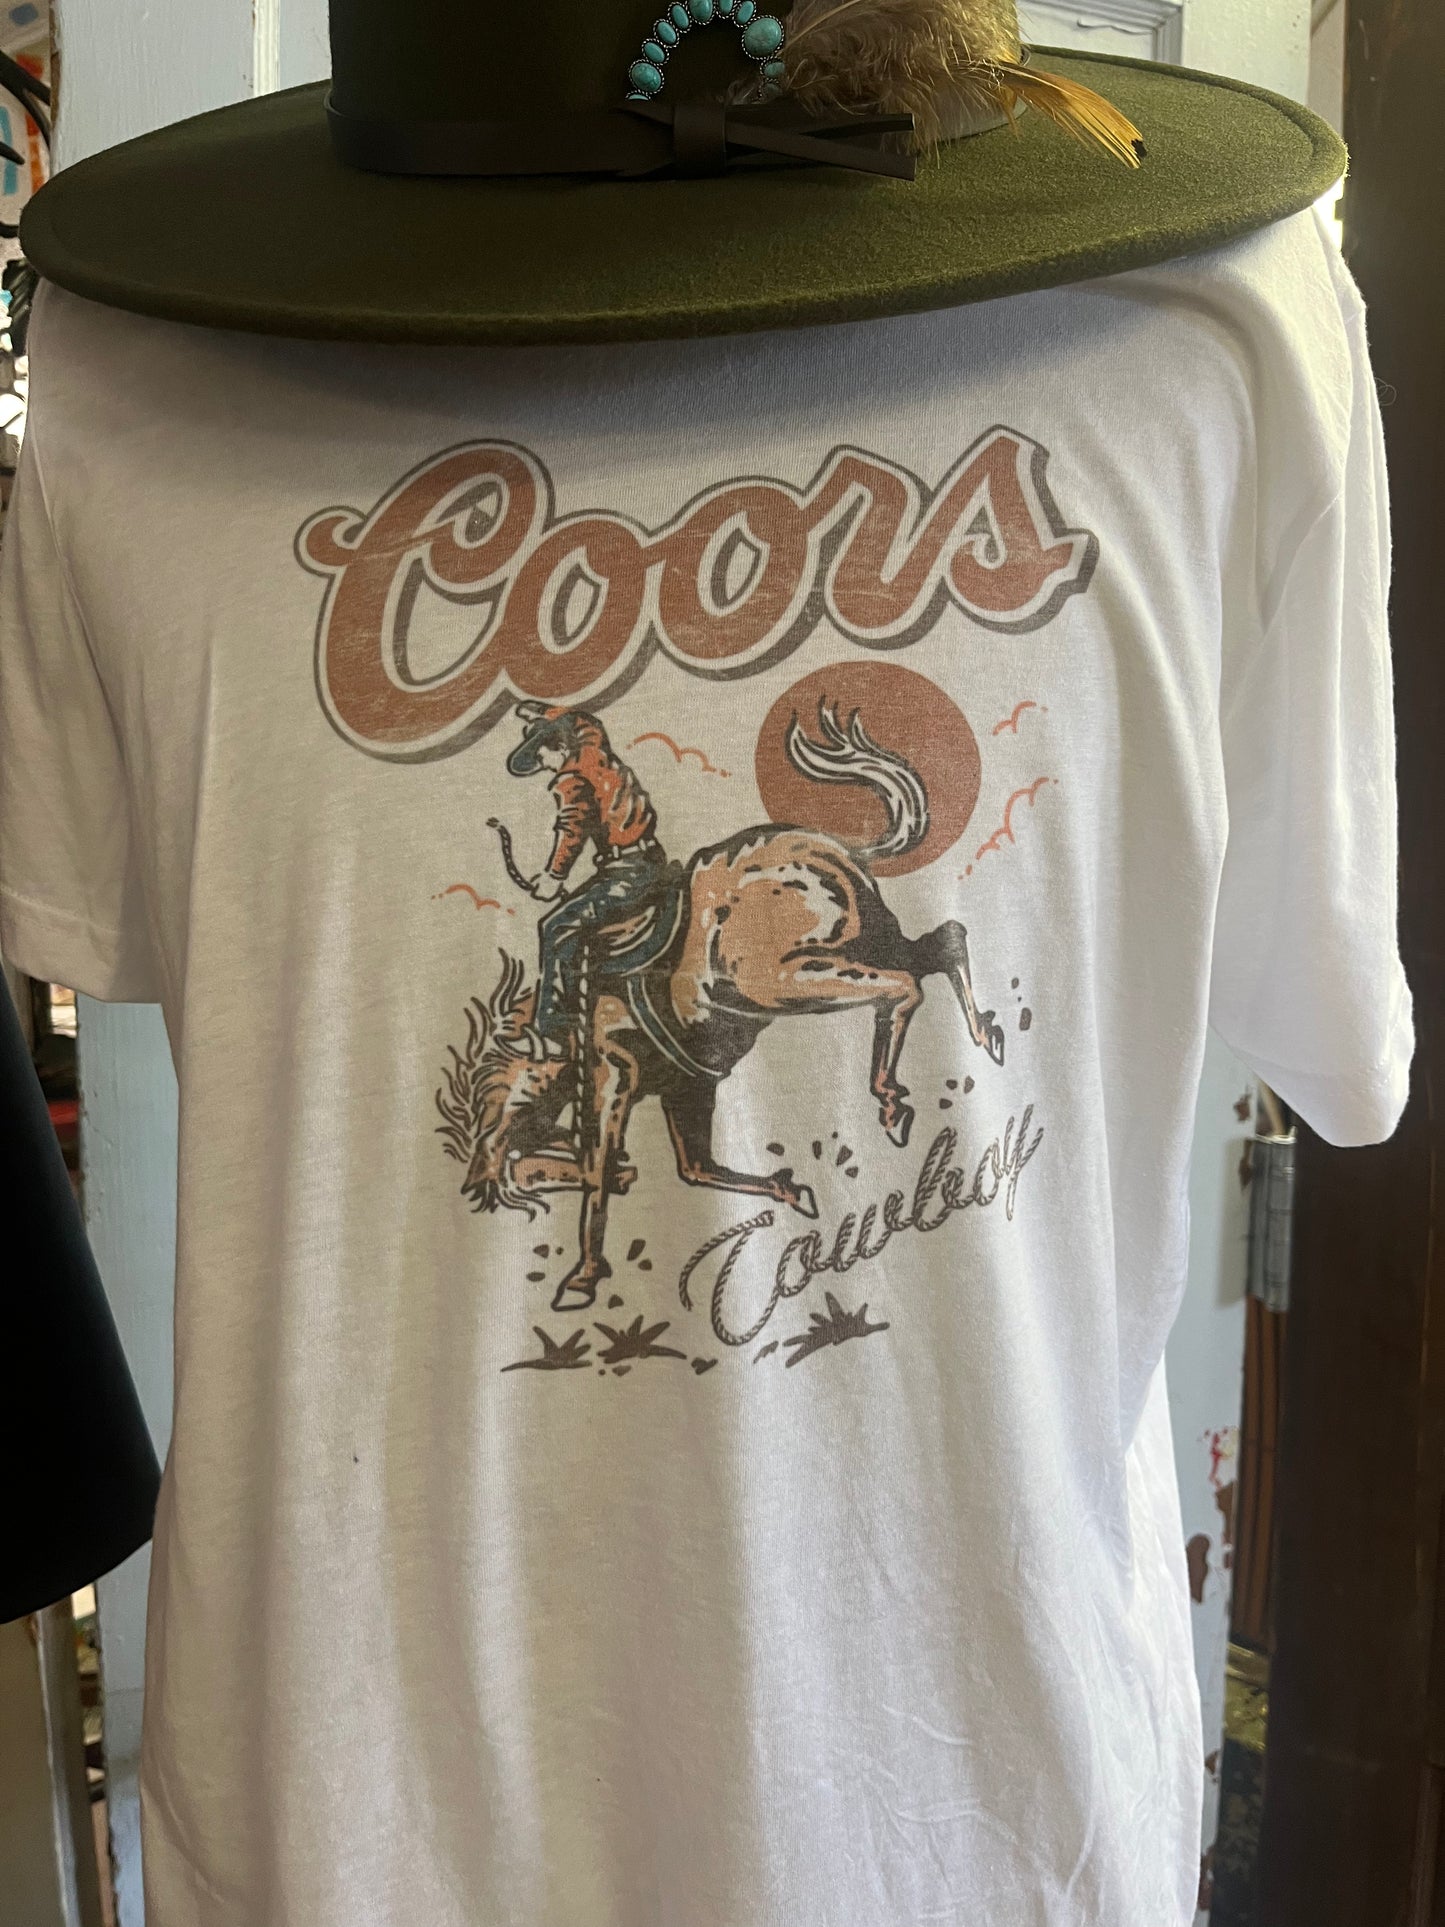 Coors Cowboy shirt